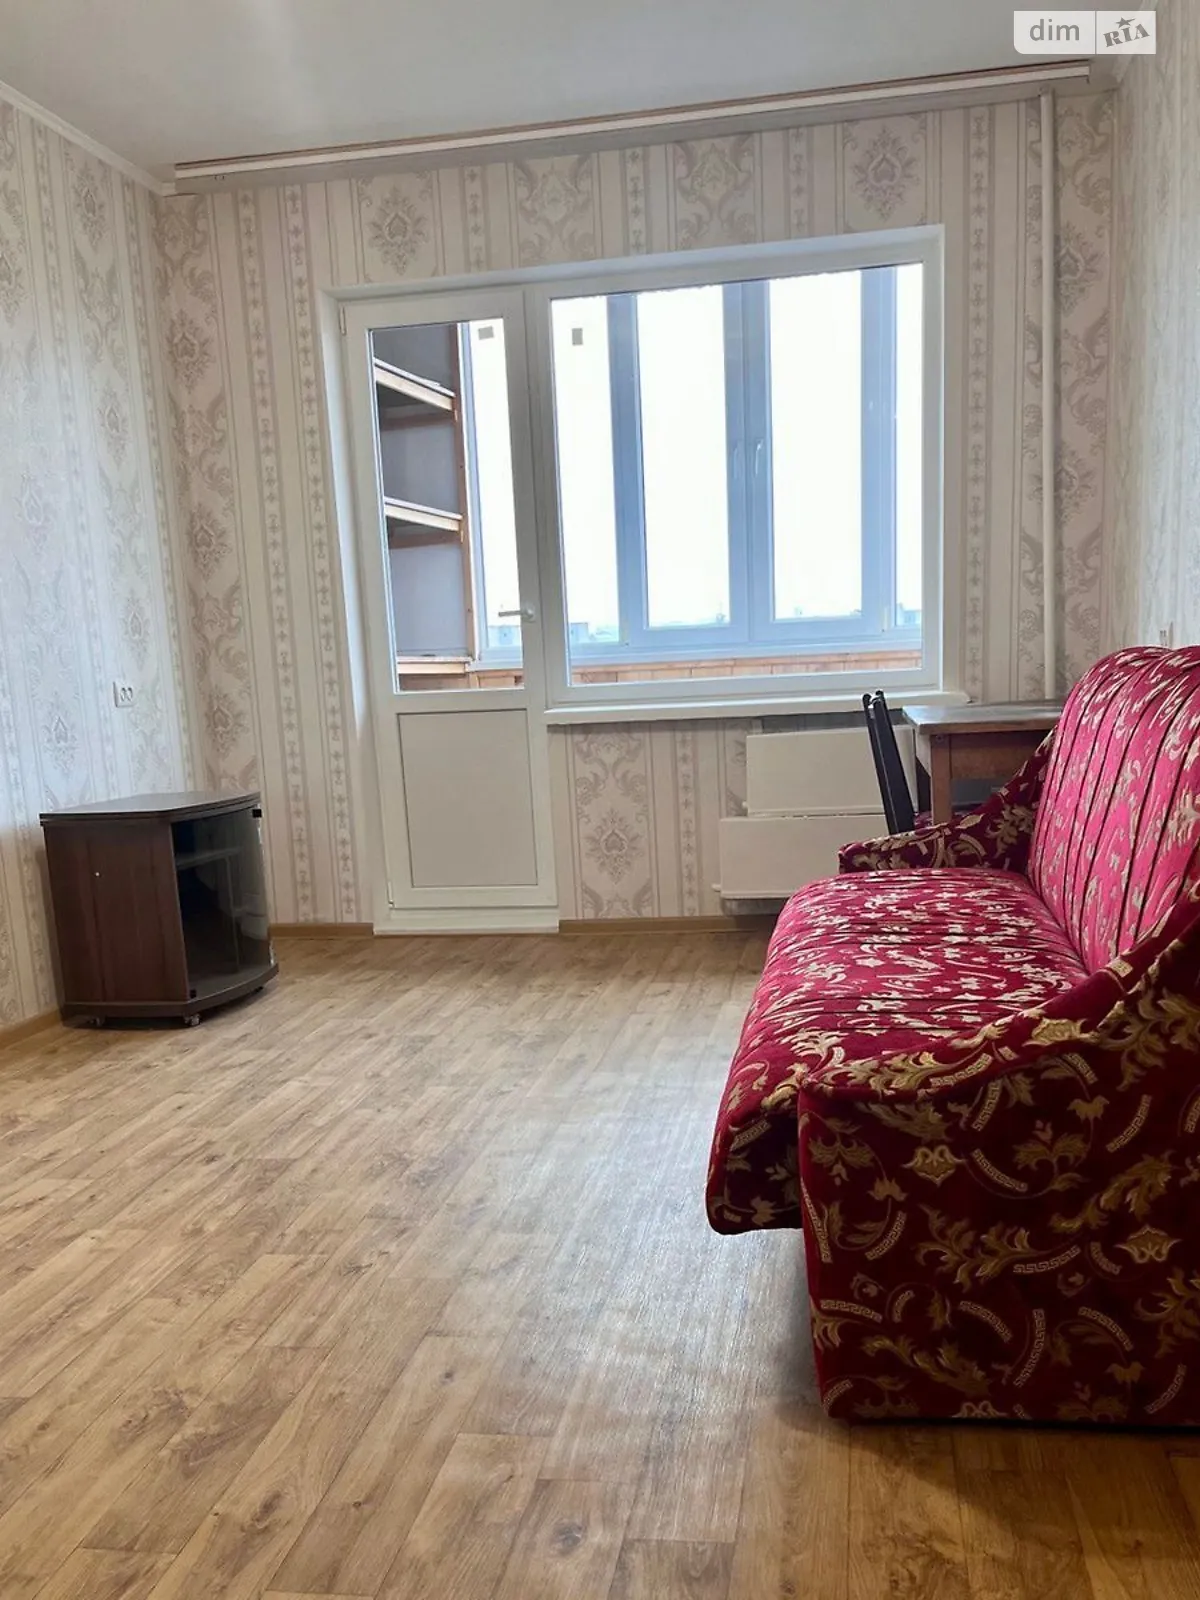 Продается 1-комнатная квартира 36 кв. м в Чернигове - фото 1